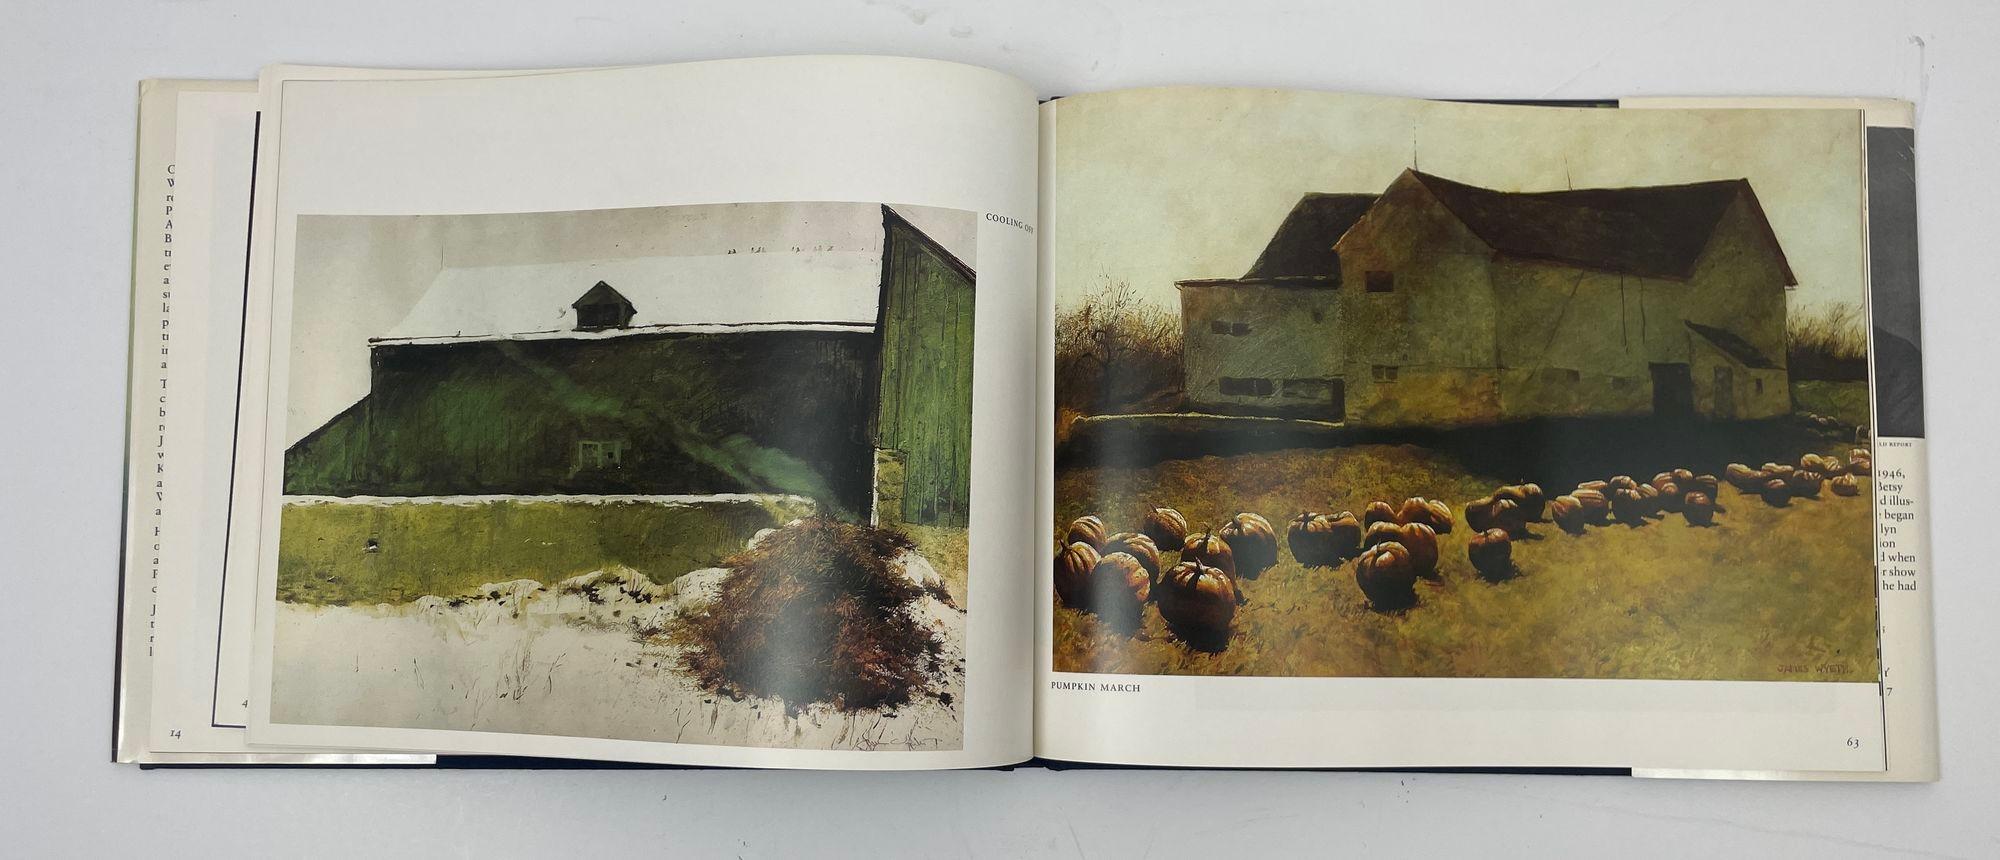 Jamie Wyeth by Jamie Wyeth Hardcover Book 1980 1st Ed. For Sale 4